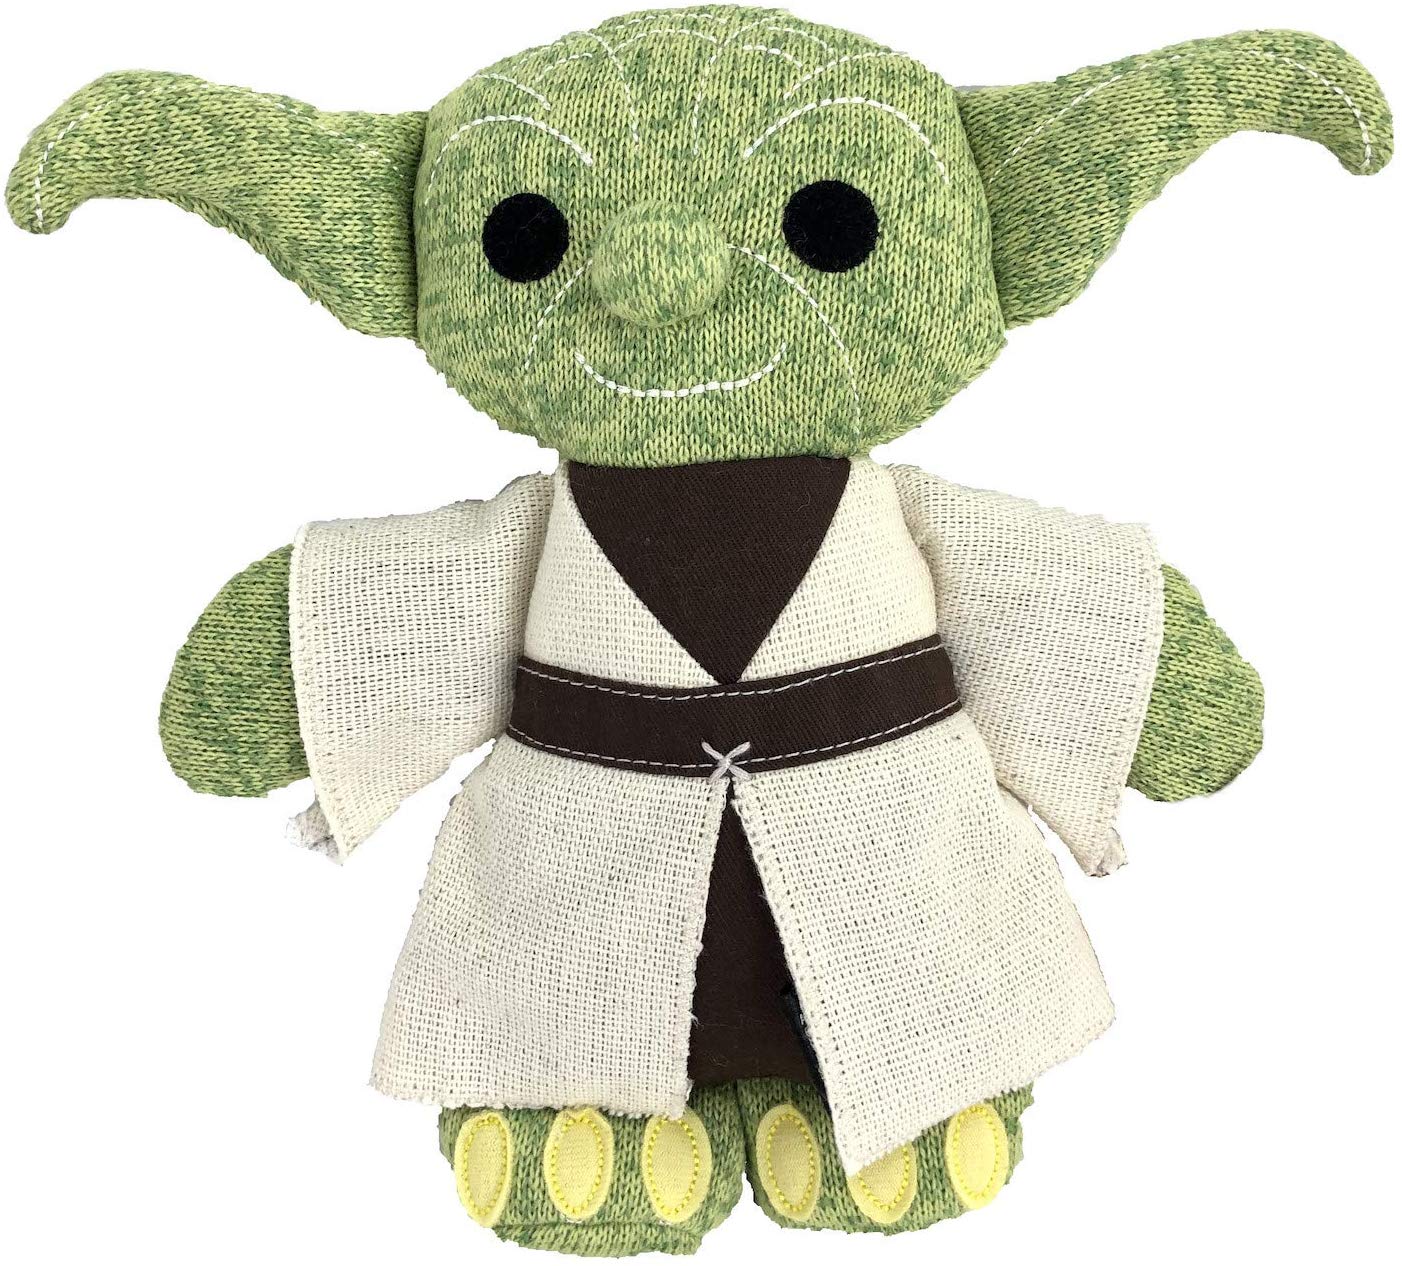 Disney Parks Star Wars Galaxy's Edge Yoda Plush New with Tag - image 2 of 3